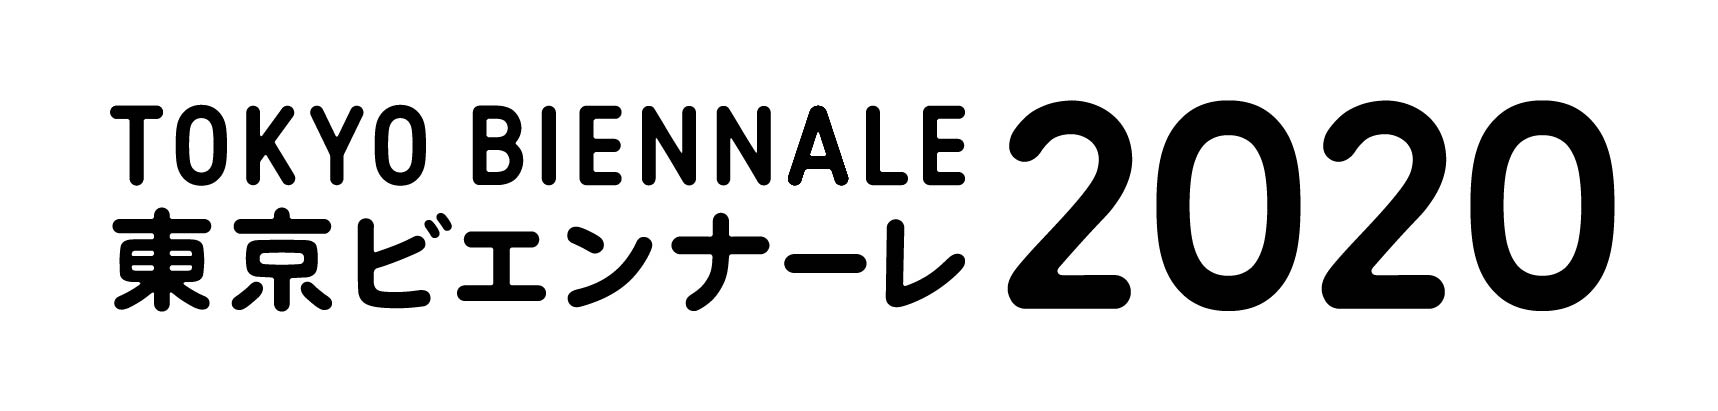 TOKYO BIENNALE 2020 東京ビエンナーレ